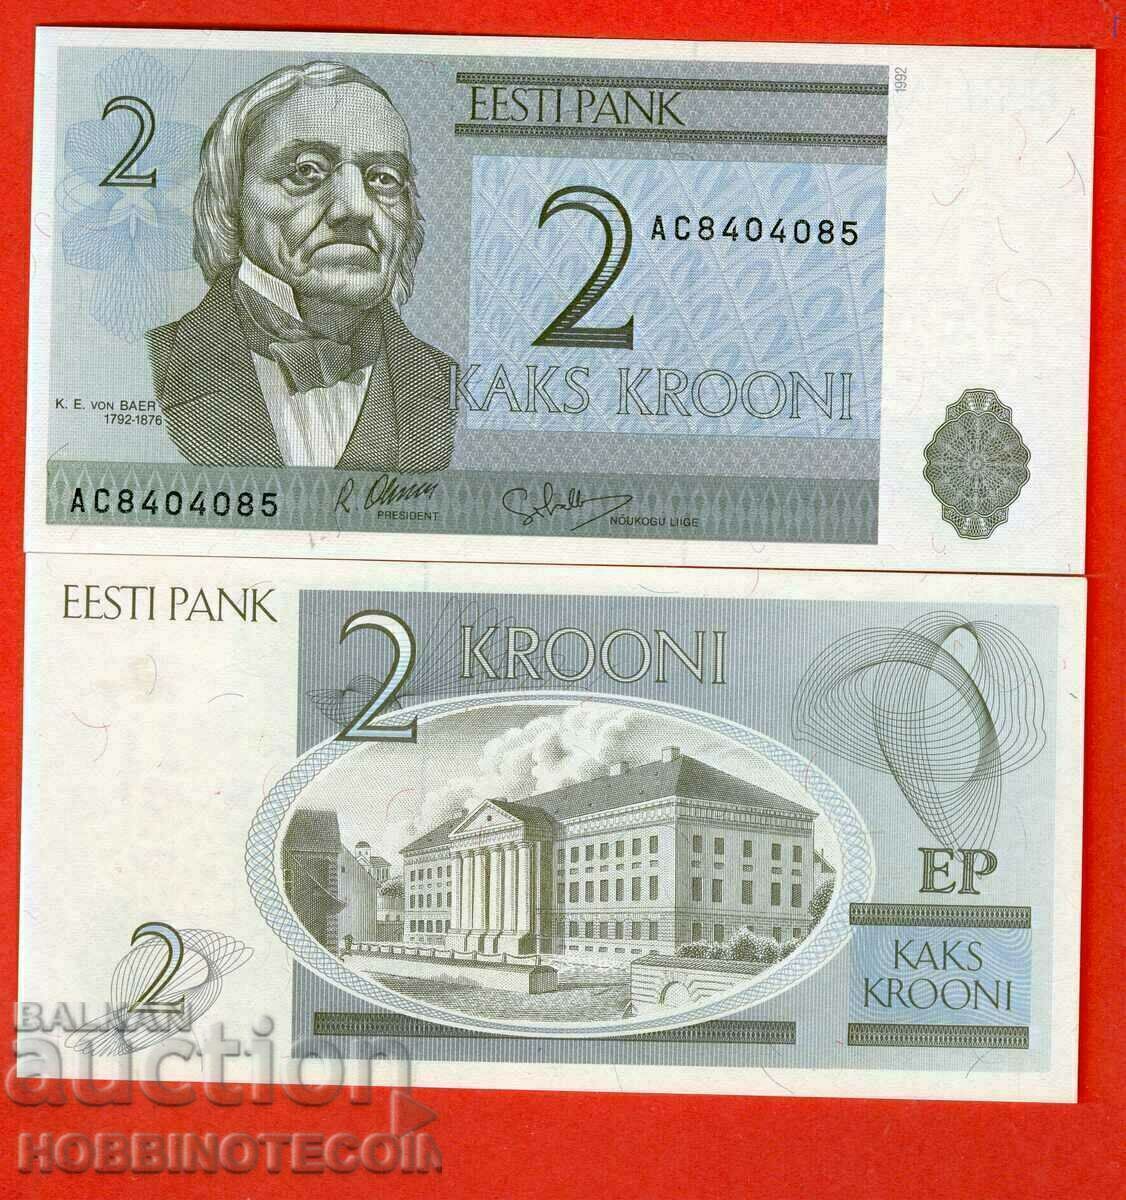 ESTONIA ESTONIA 2 Krone issue 1992 issue NEW UNC